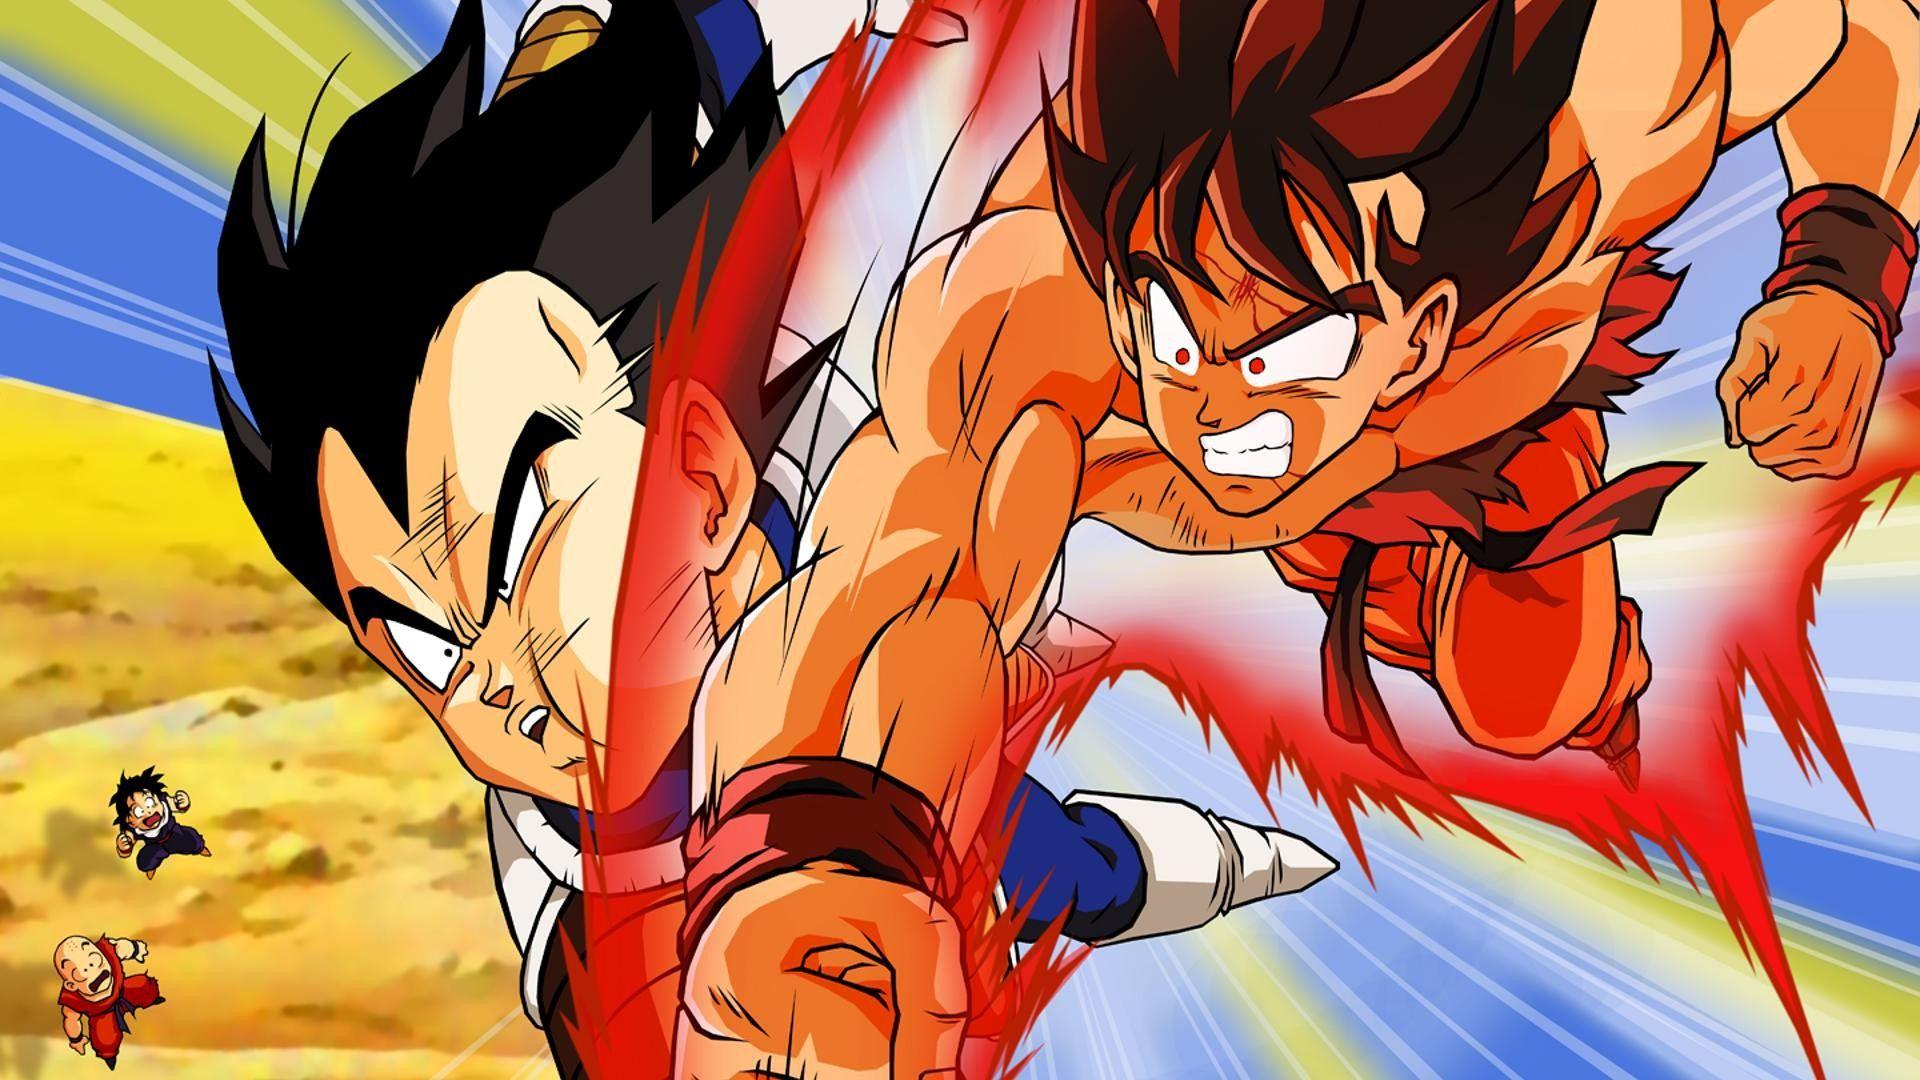 Goku VS Vegeta Fighting Wallpaper, Goku VS Vegeta Fighting Background, Goku VS Vegeta Fighting Image. Dragon ball super goku, Dragon ball, Goku vs